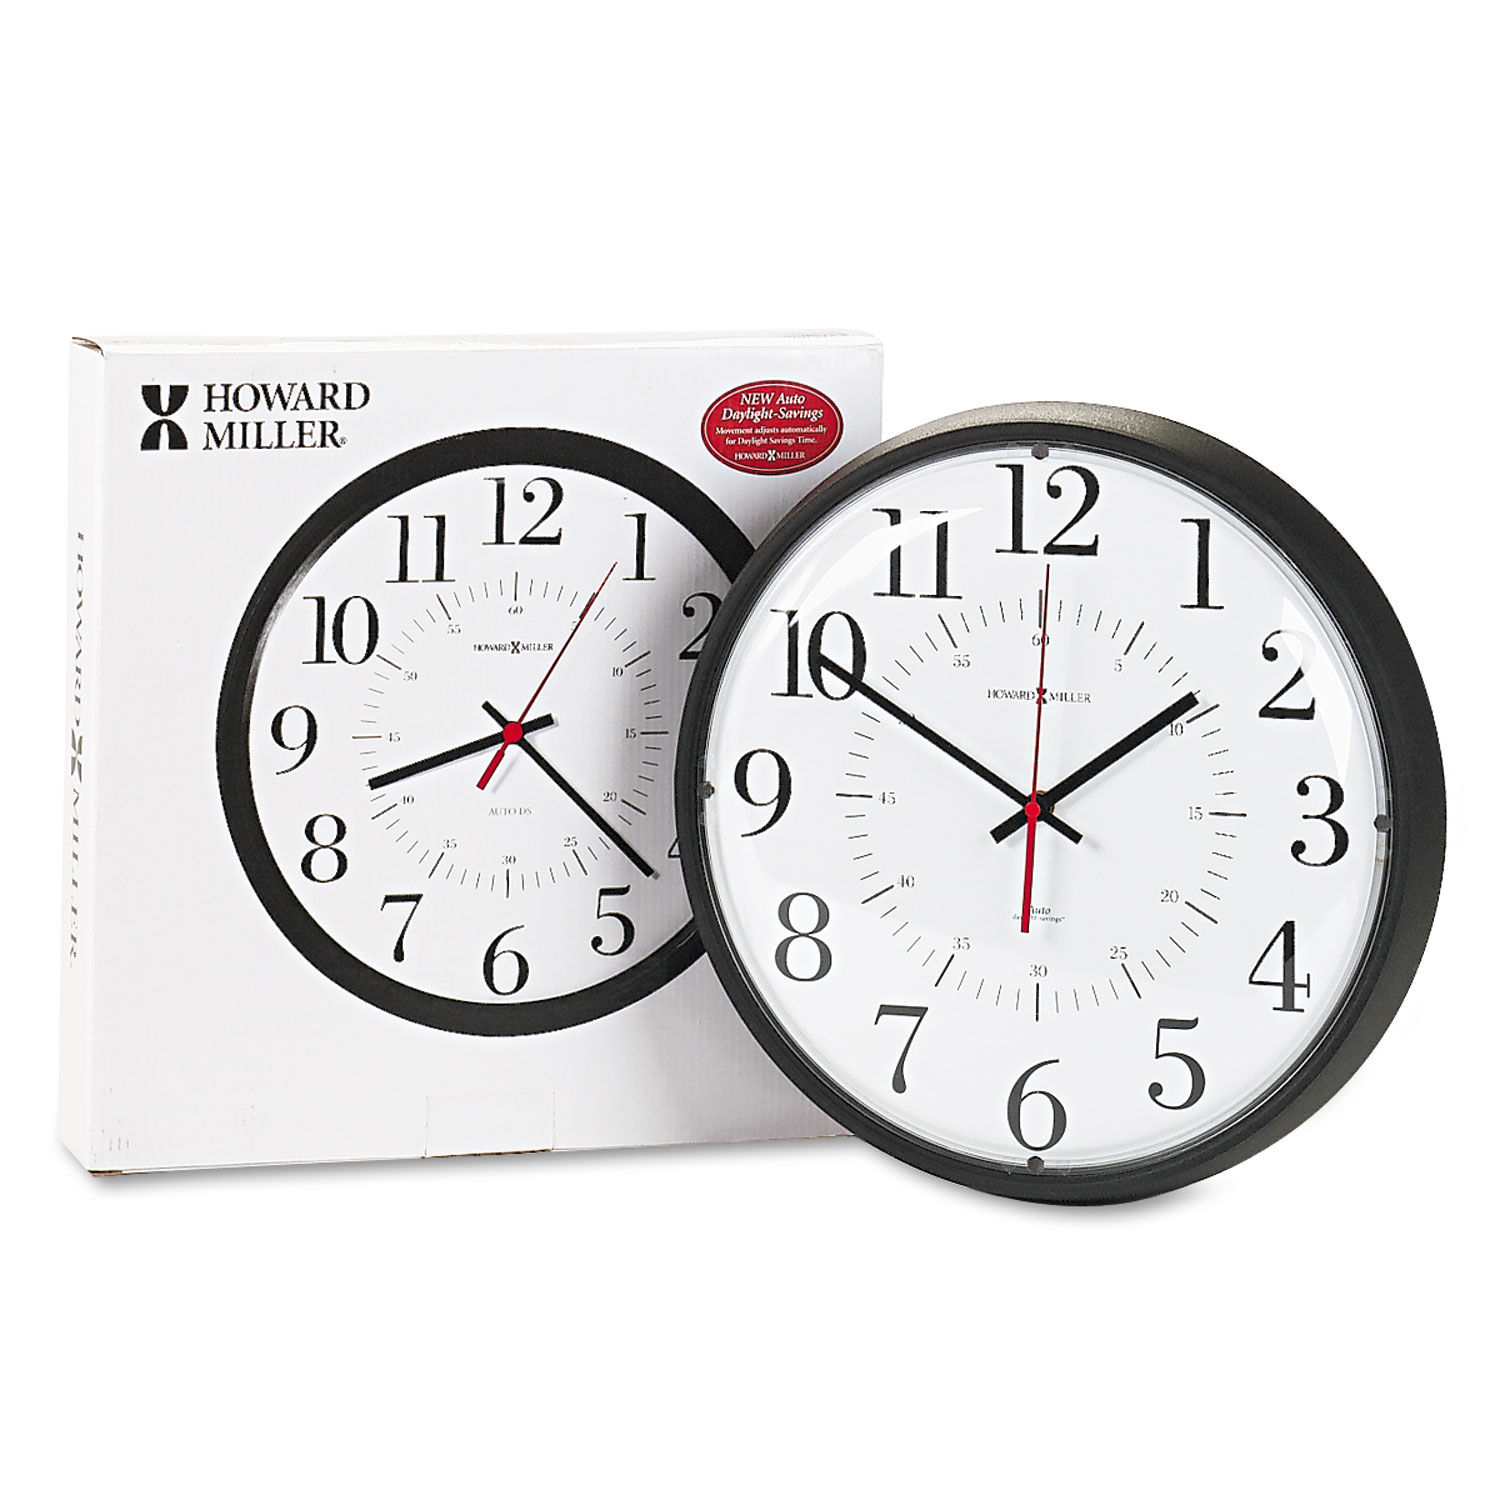 Alton Auto Daylight Savings Wall Clock 14" Overall Diameter, Black Case, 1 AA (sold separately)